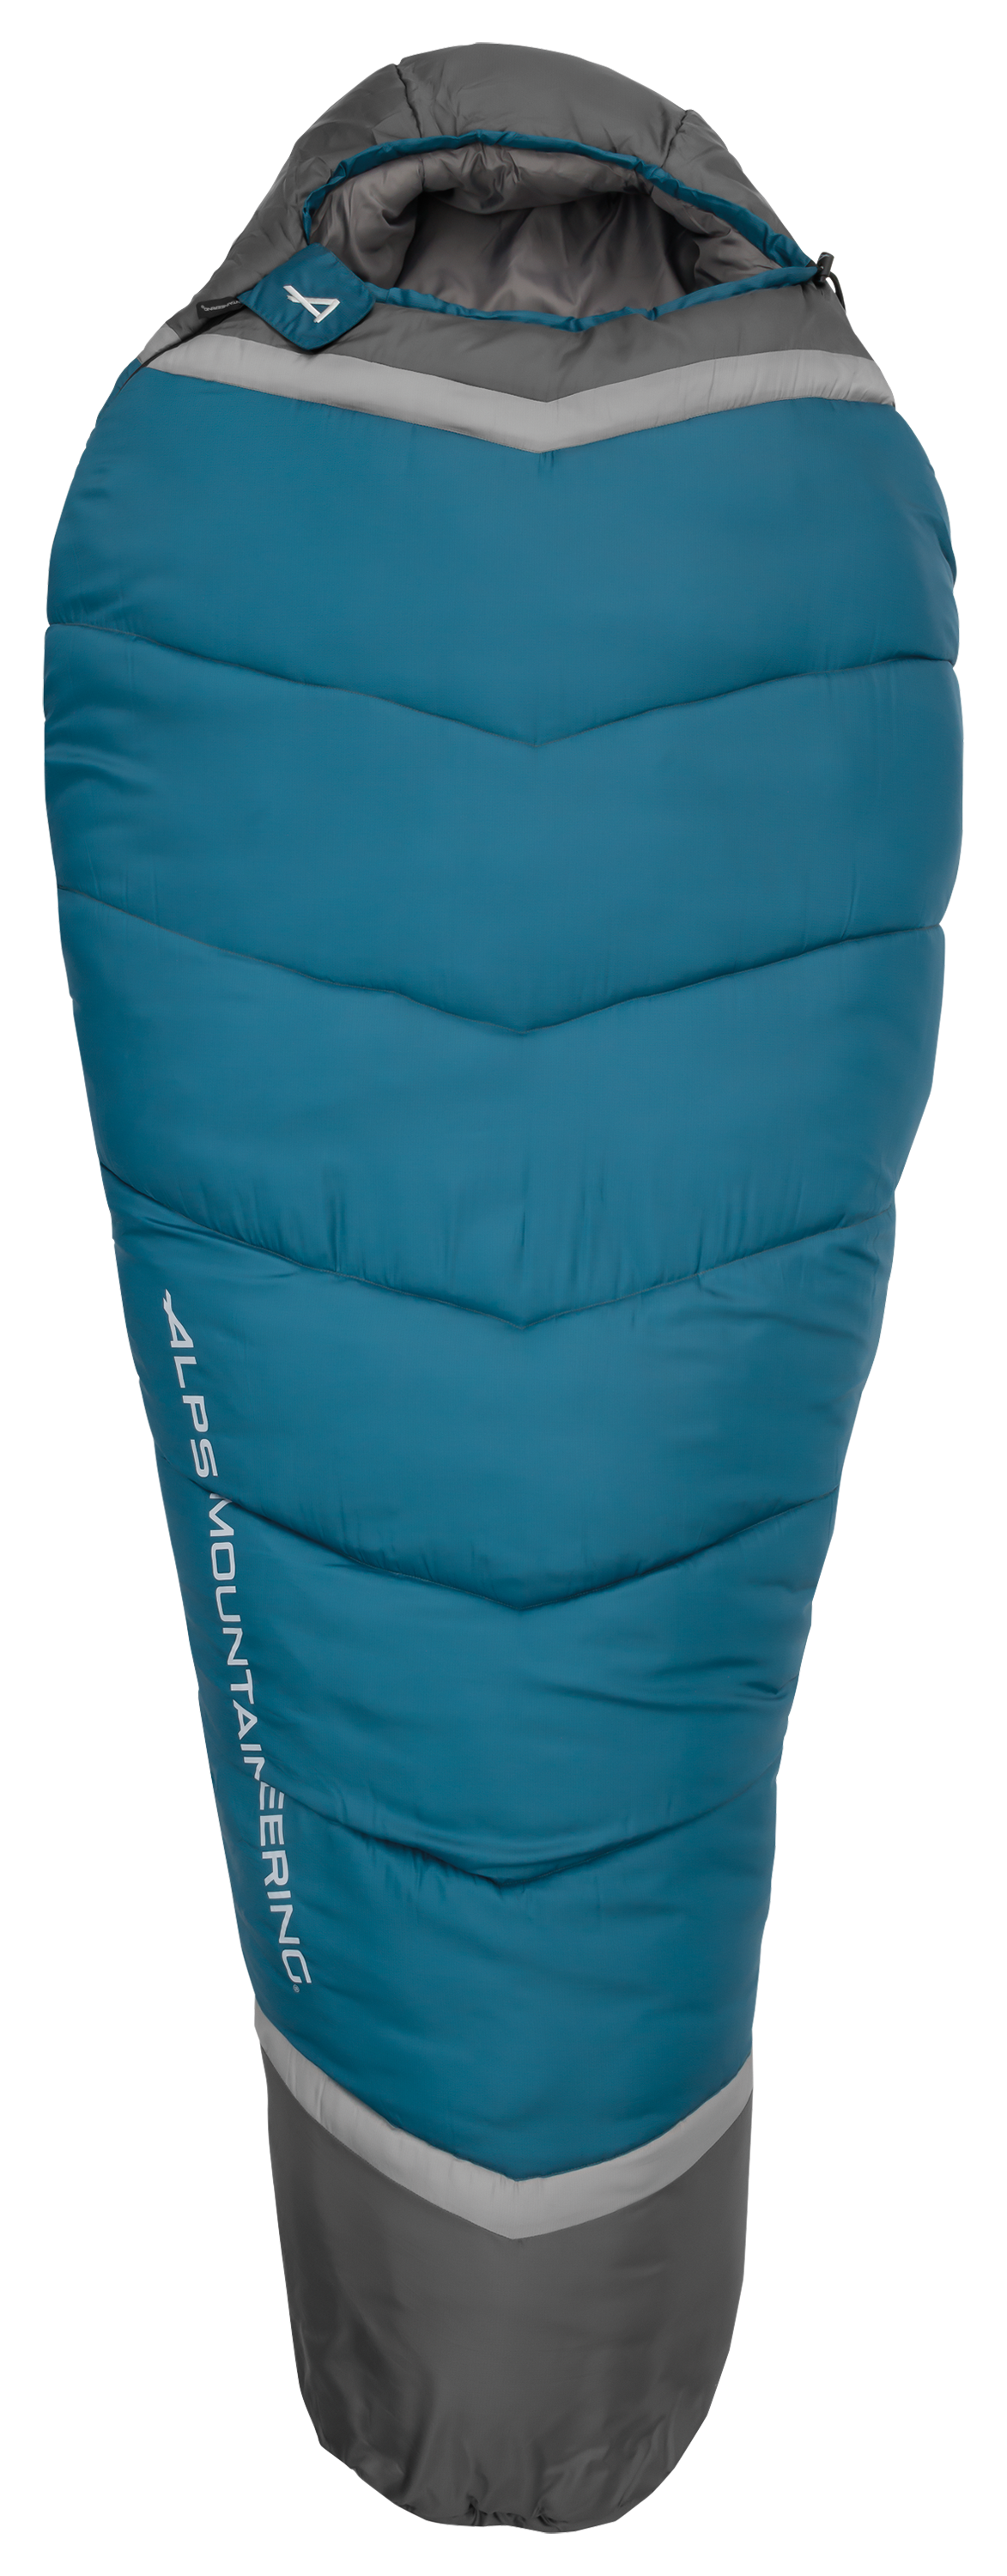 Alps Mountaineering Blaze -20F Mummy Sleeping Bag - XL